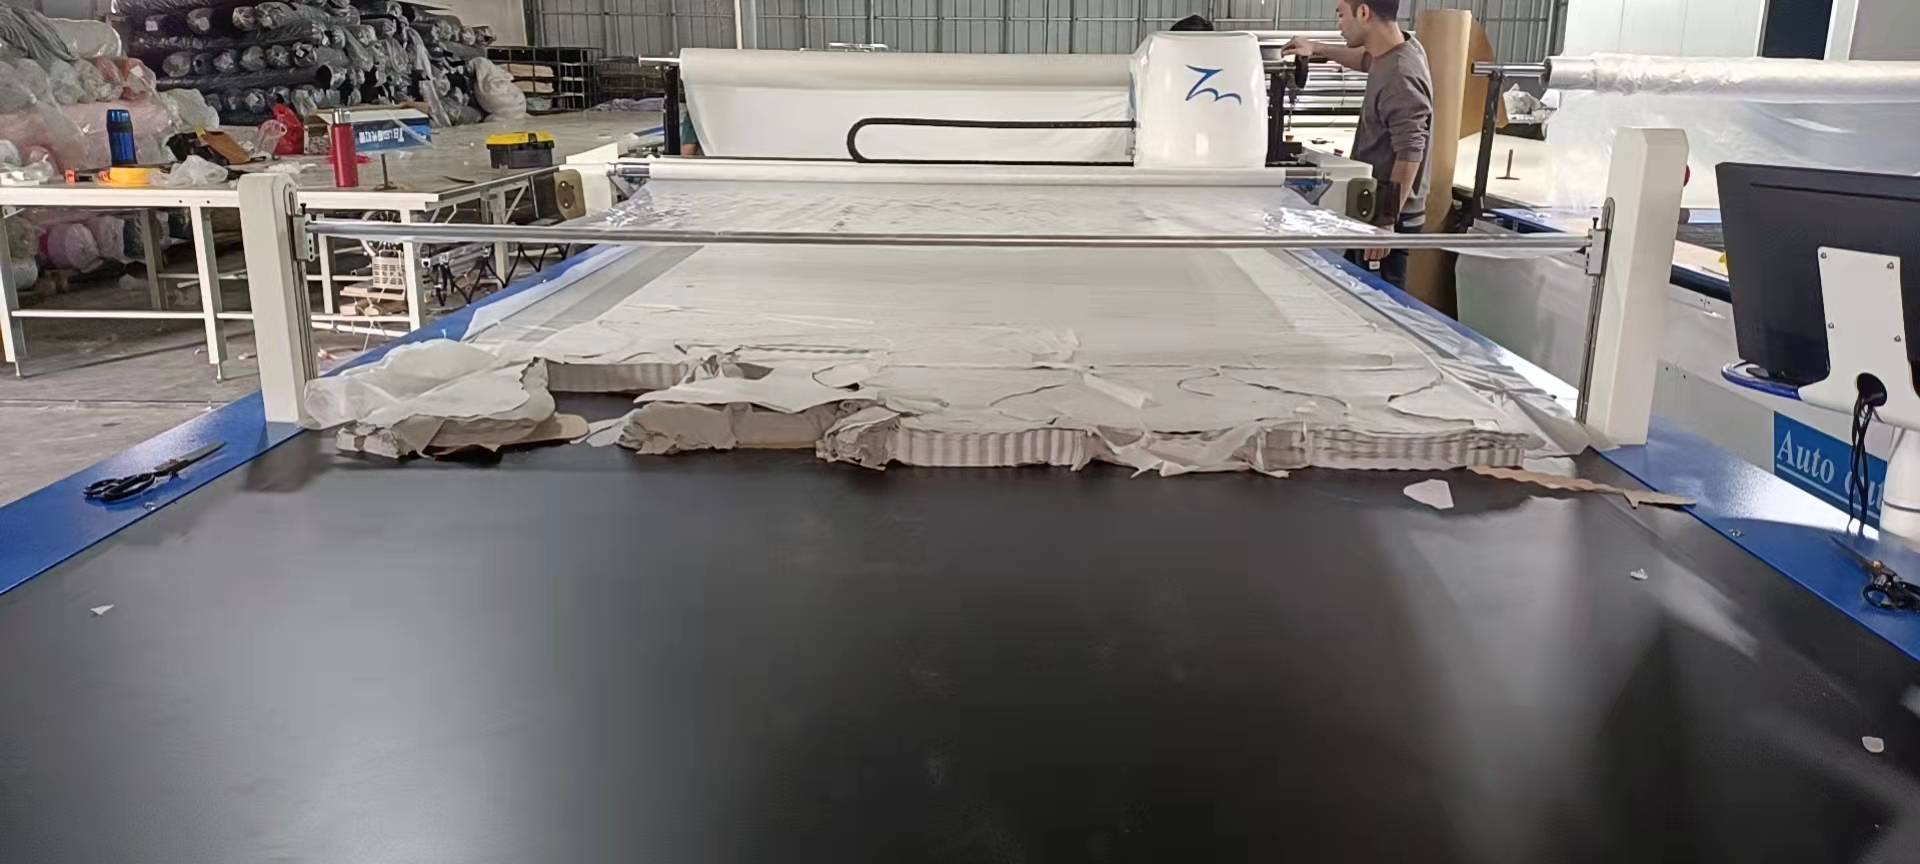 The best quality cloth cutting machine